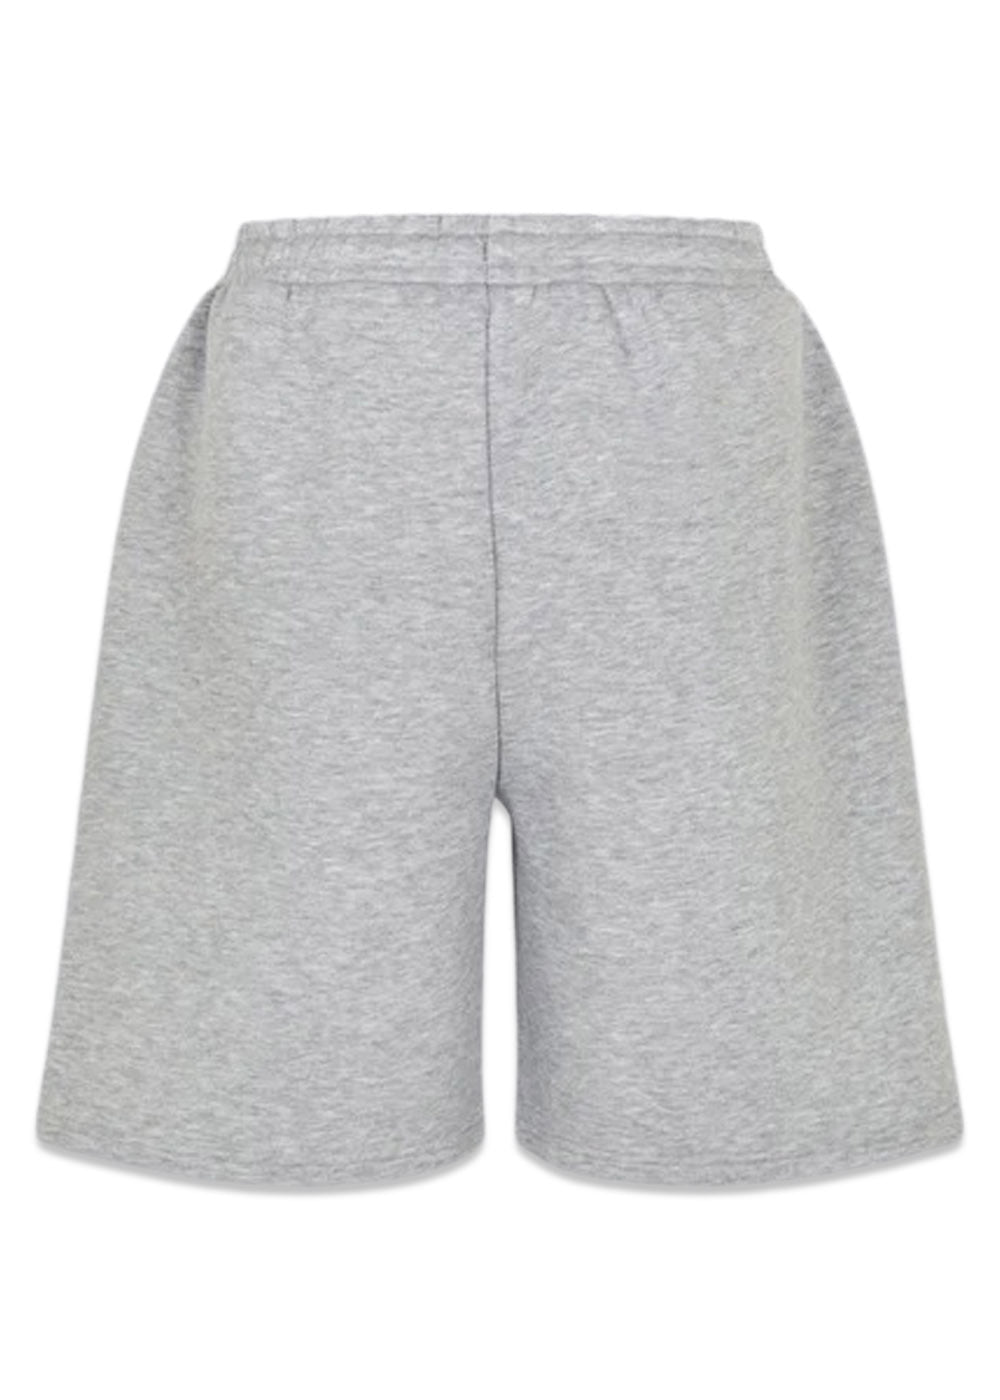 TiaMD shorts - Grey Melange